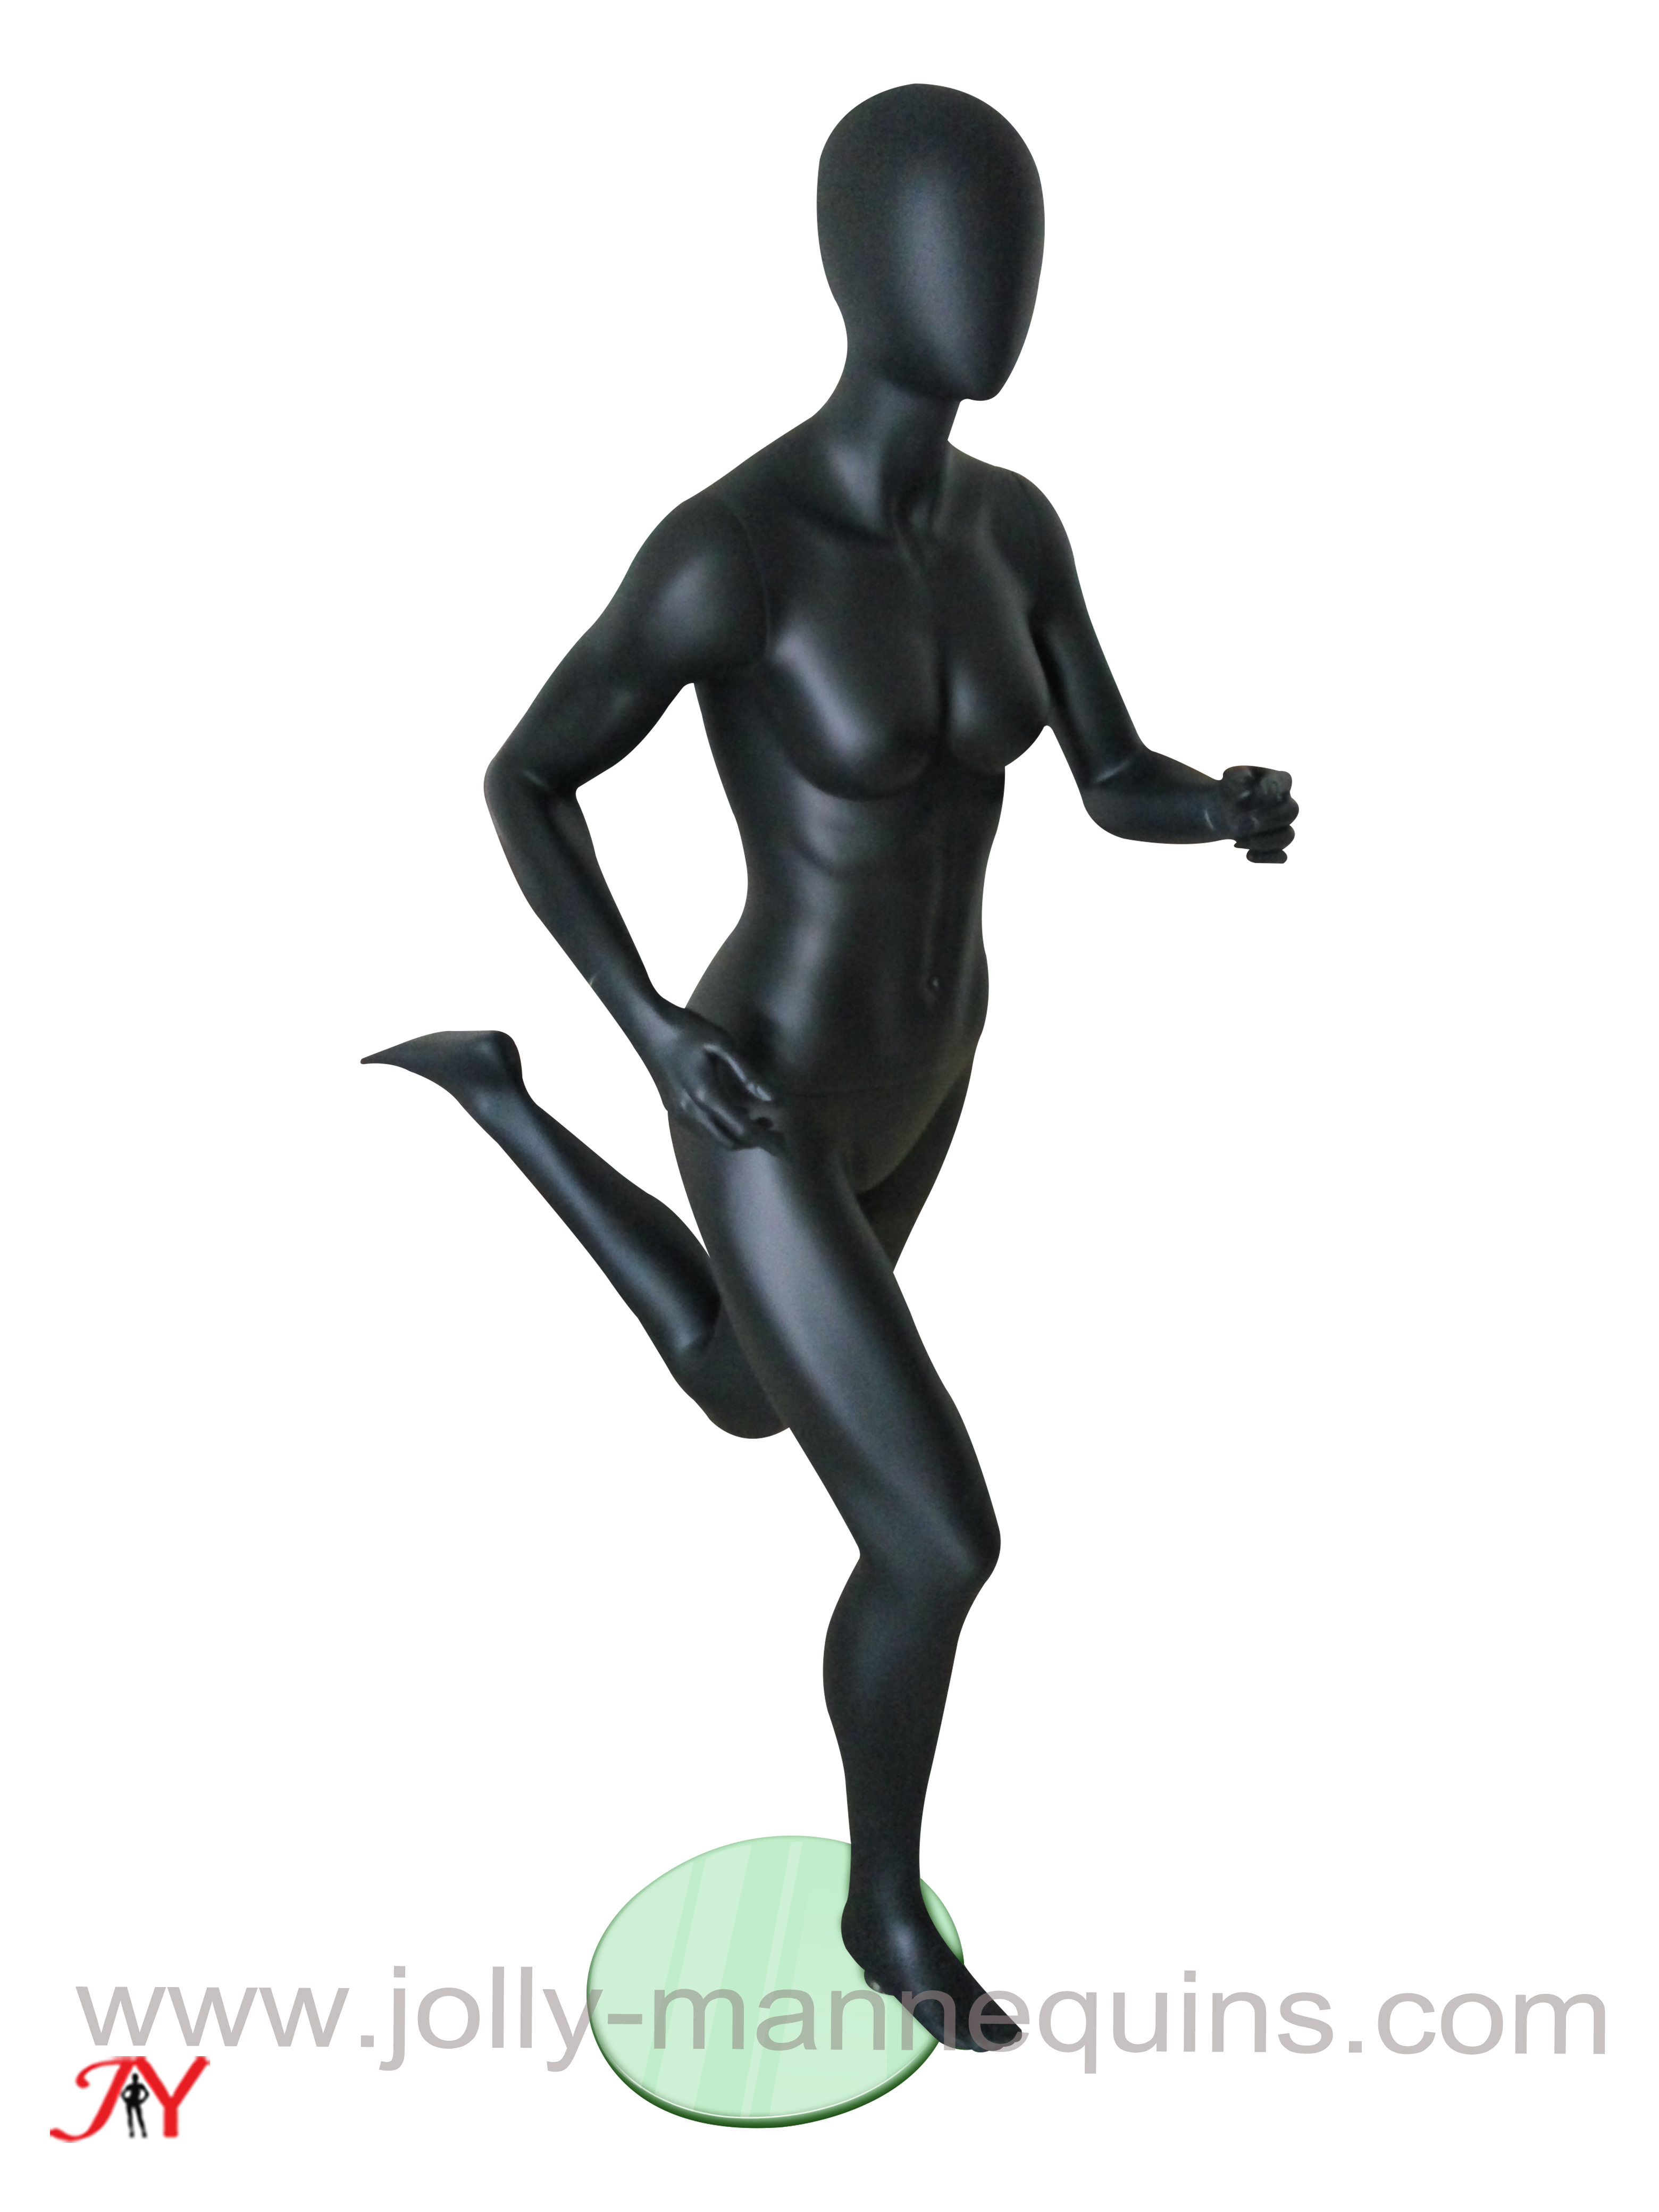 Jolly mannequins-female running mannequins black matte sport mannequins JR-1